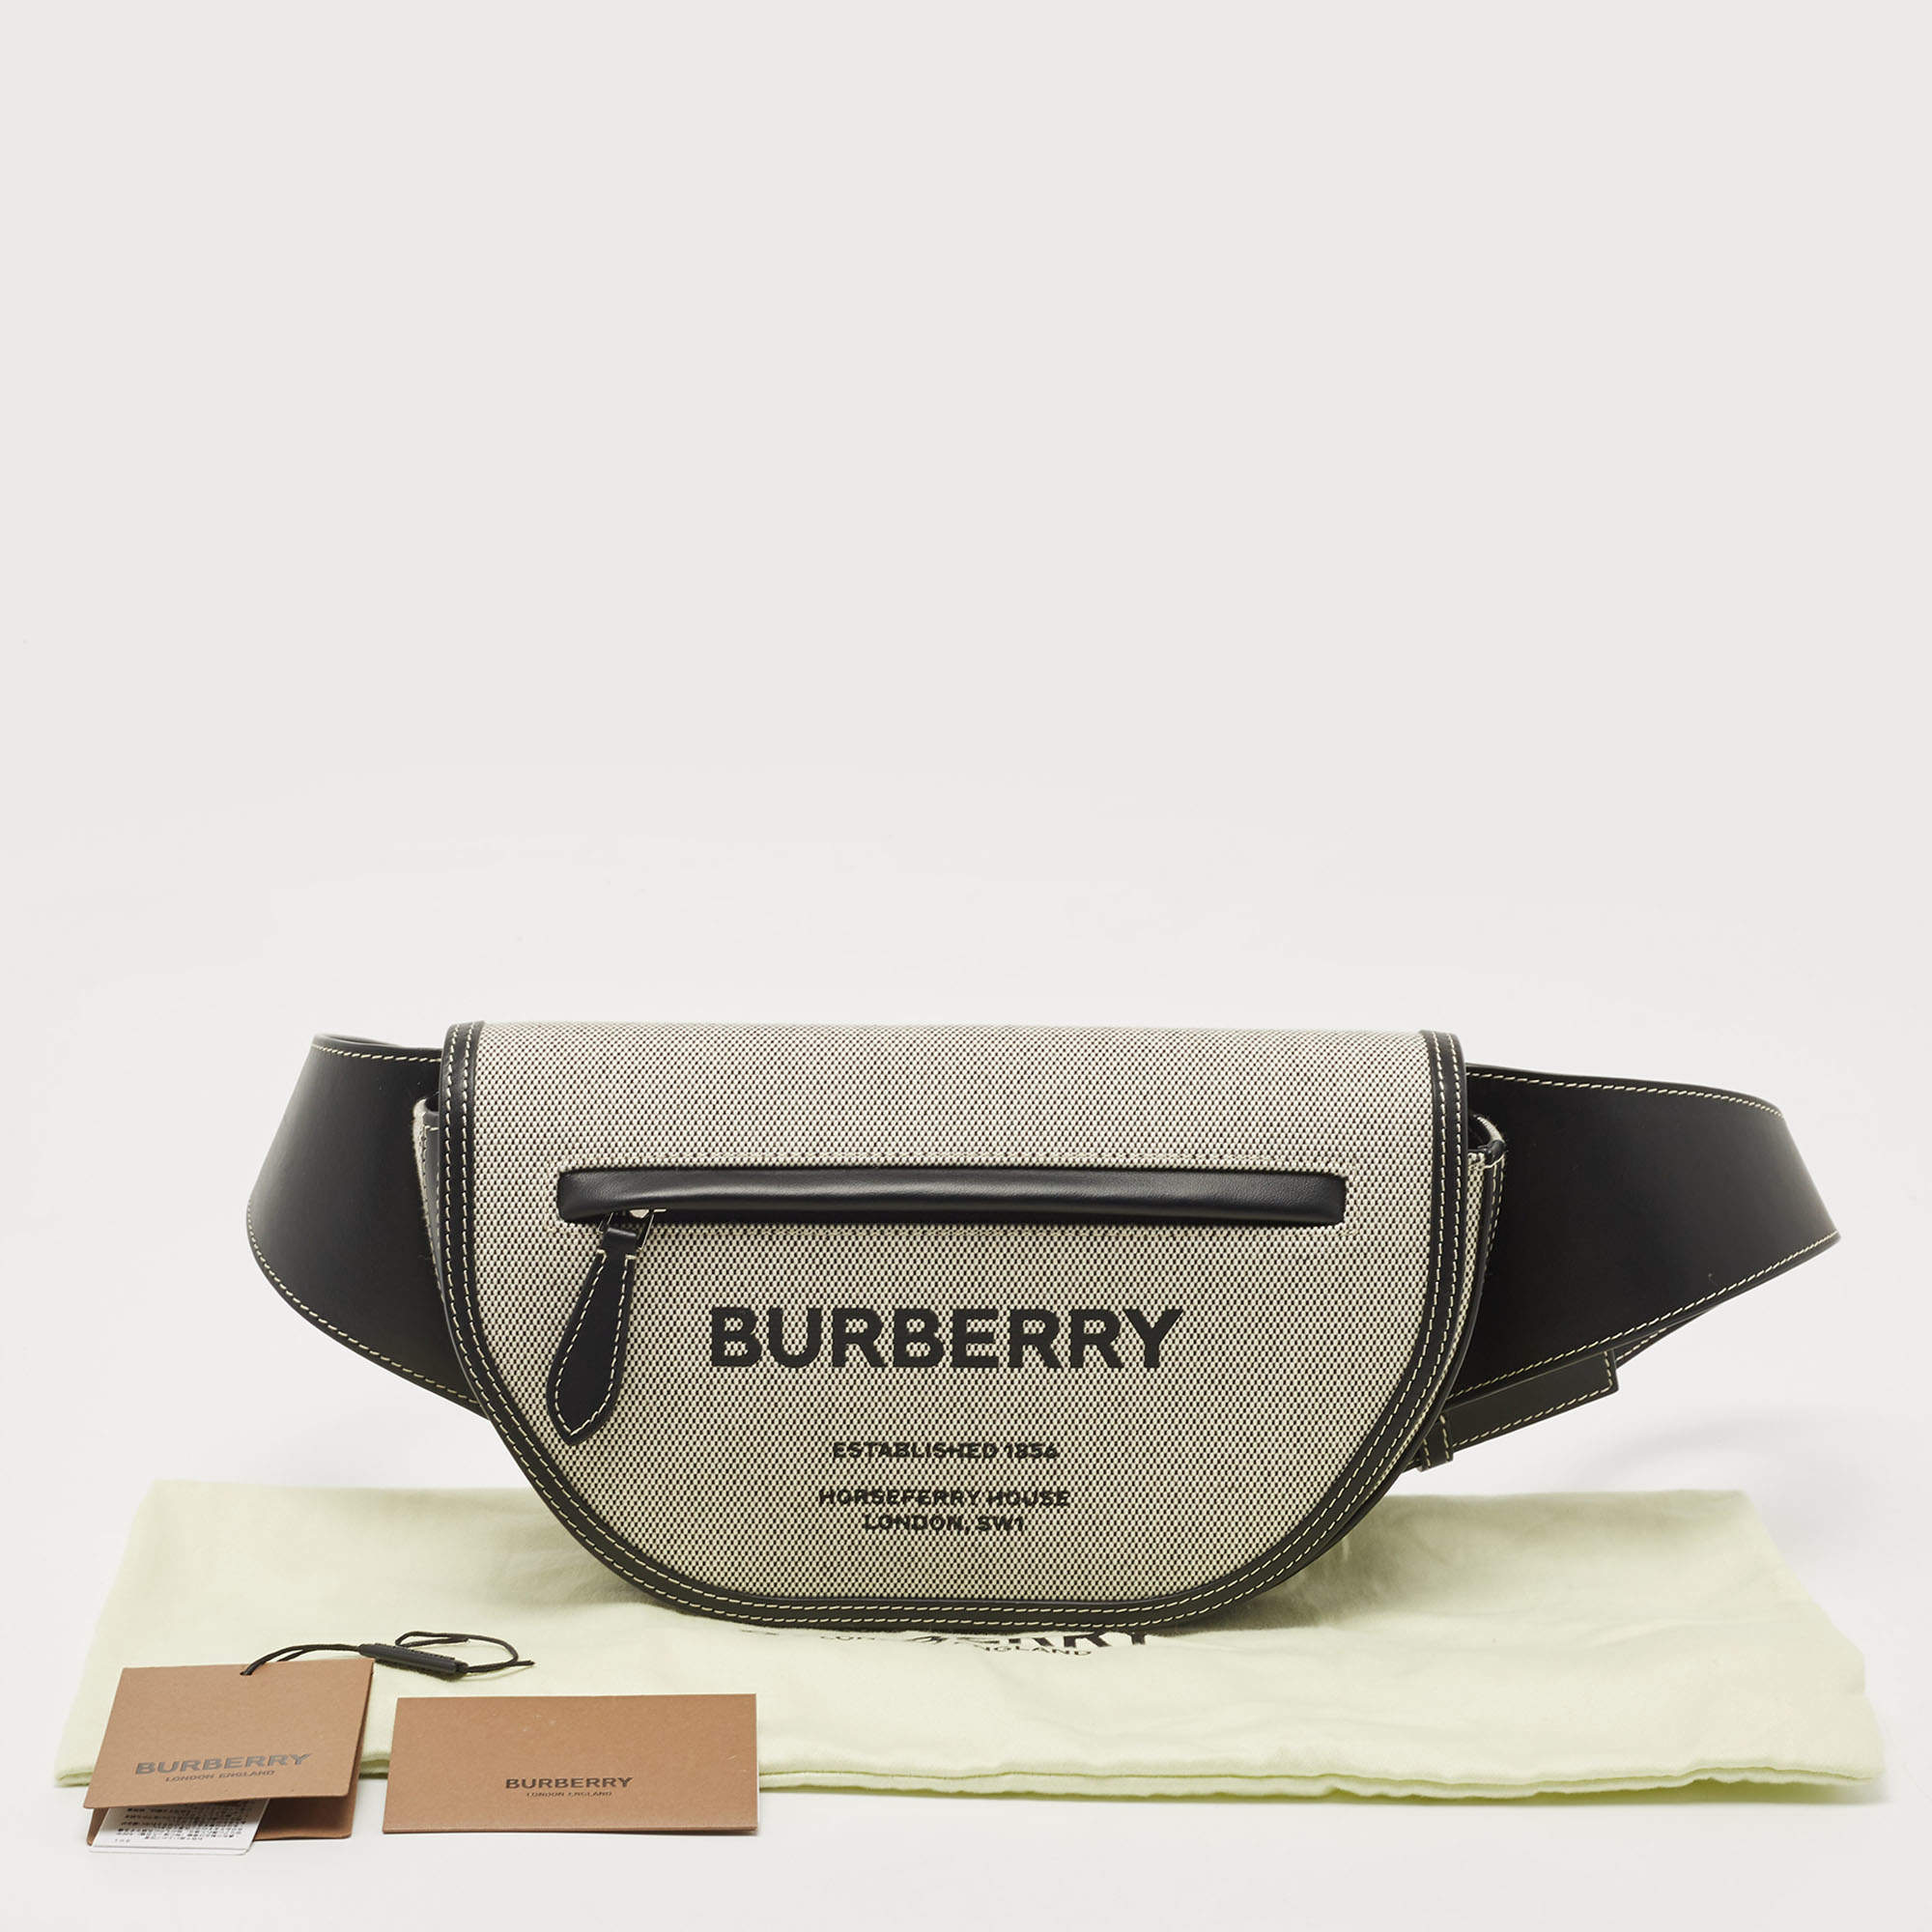 Burberry Bag Price in Pakistan 